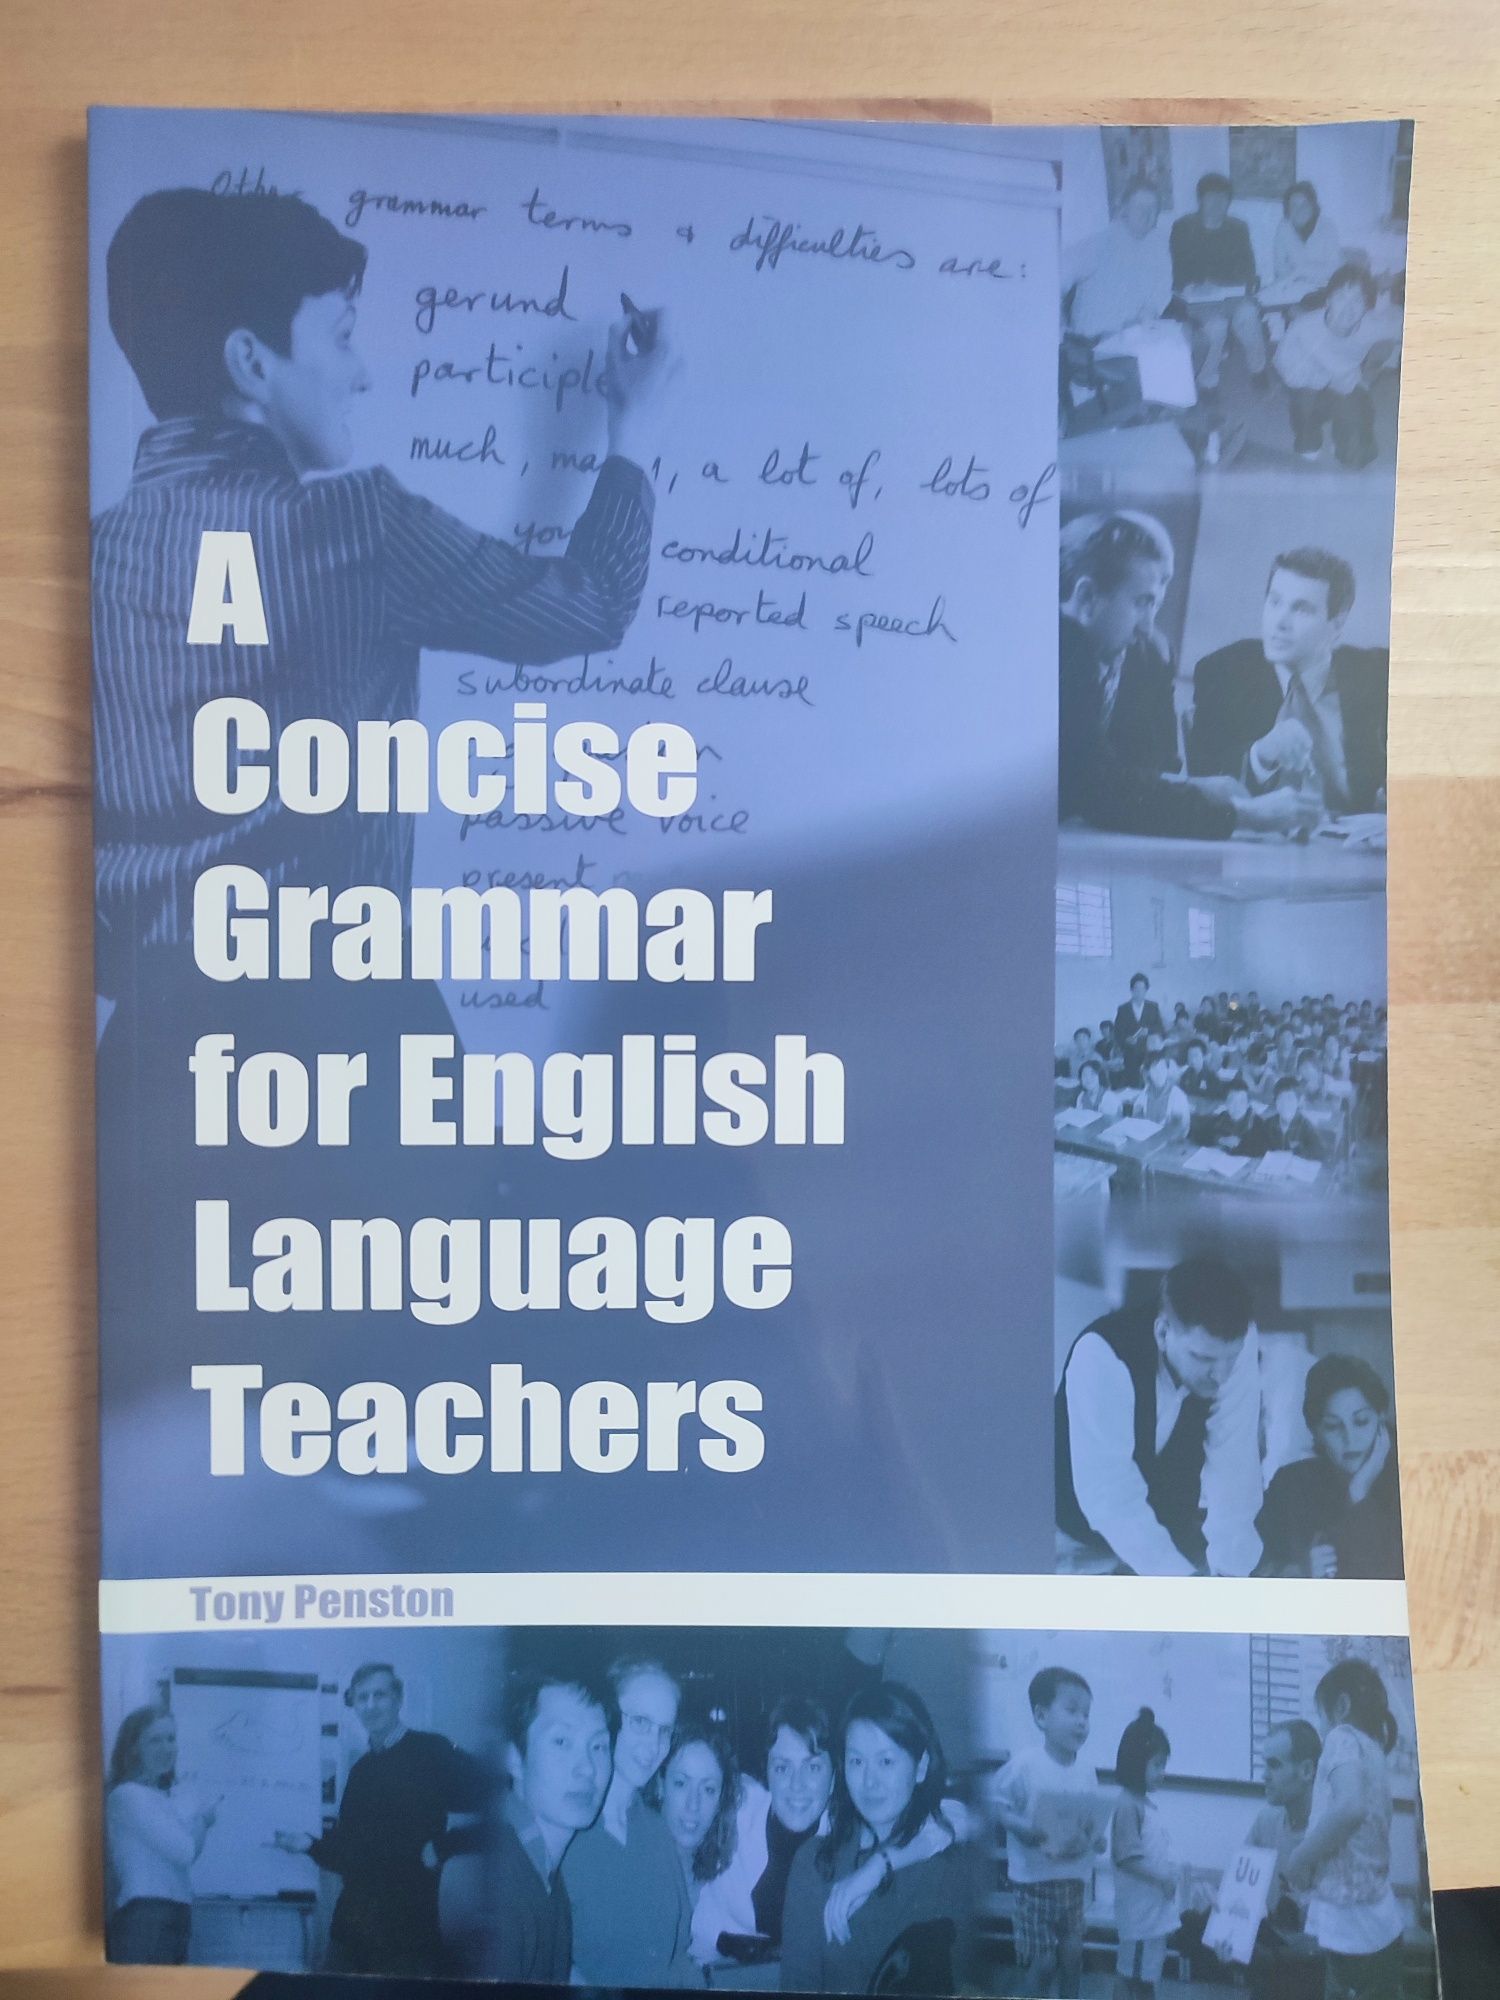 A Concise Grammar for English Language Teachers